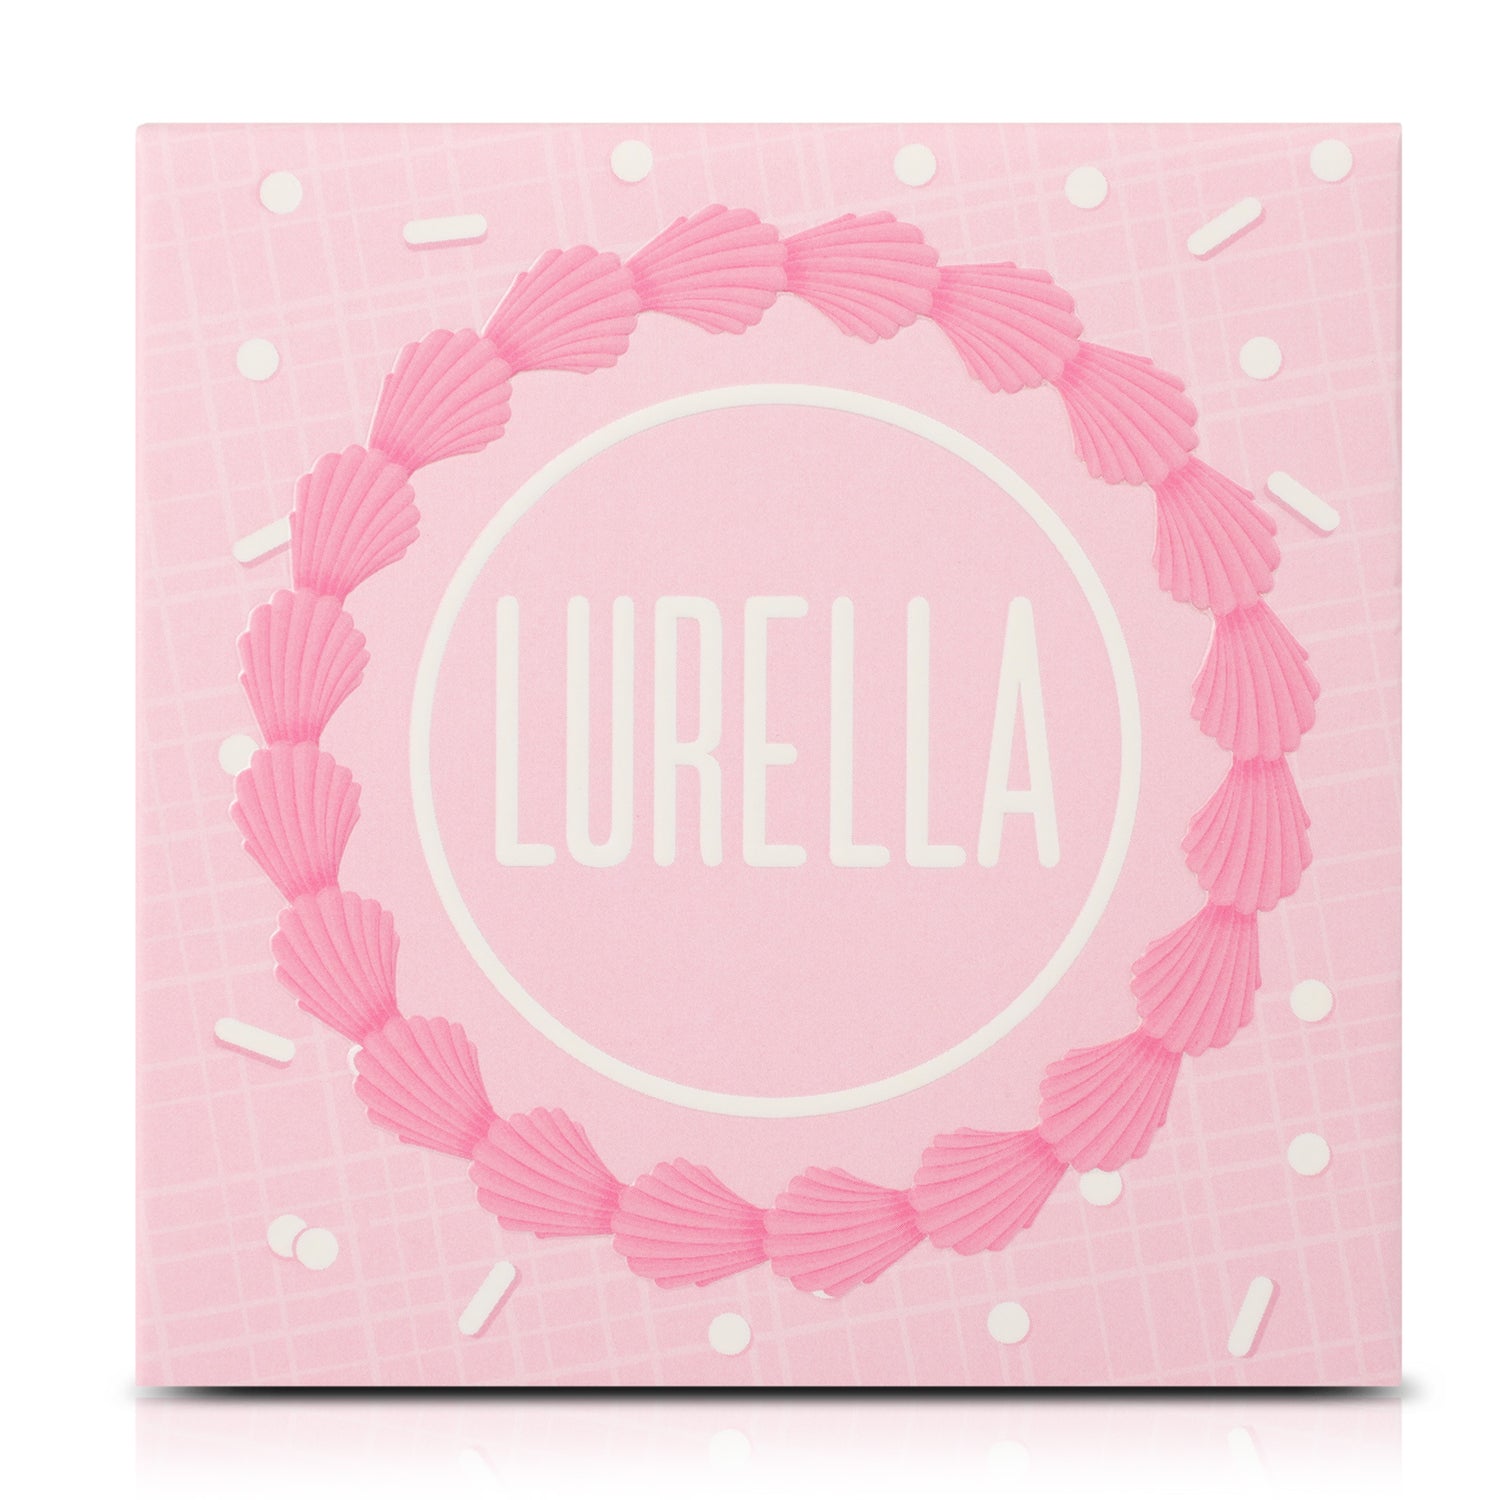 LurellaFam Travel Kit – Lurella Cosmetics